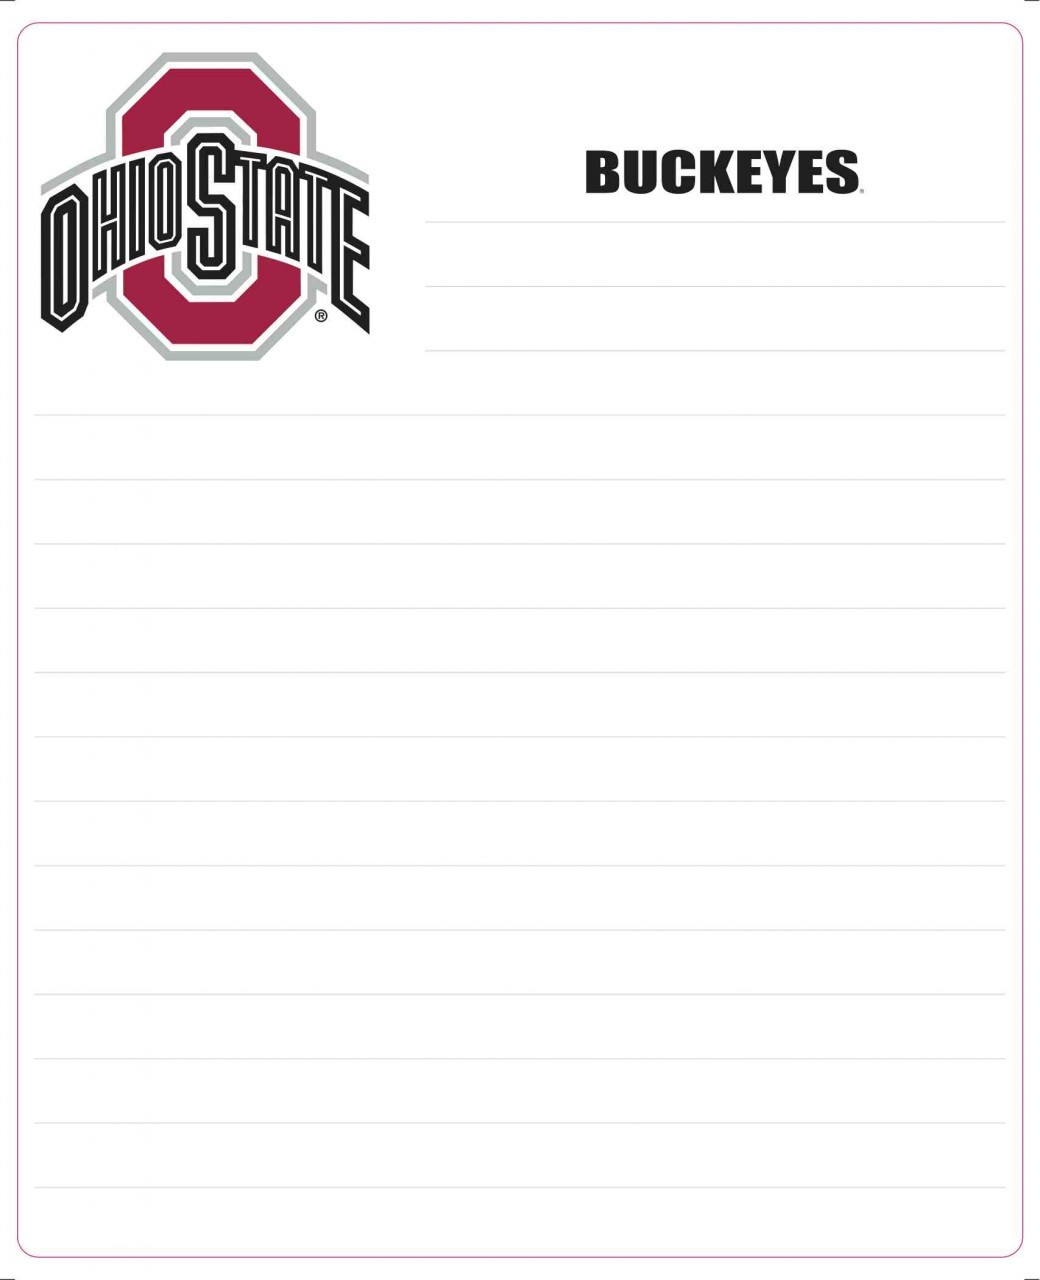 Ohio State Buckeyes Desktop